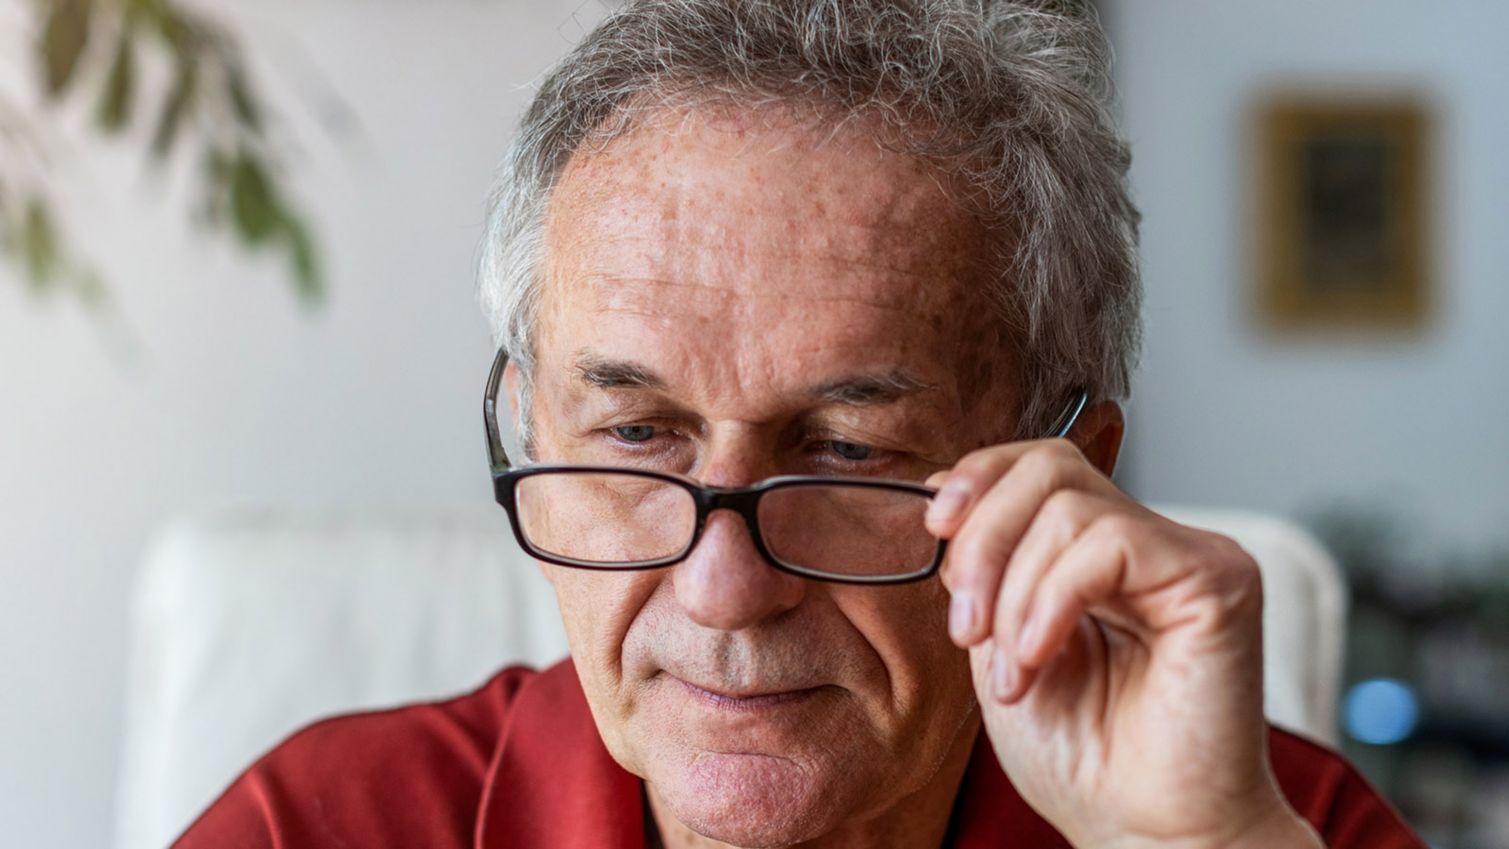 A man adjusts his glasses while reading a prescription label. 